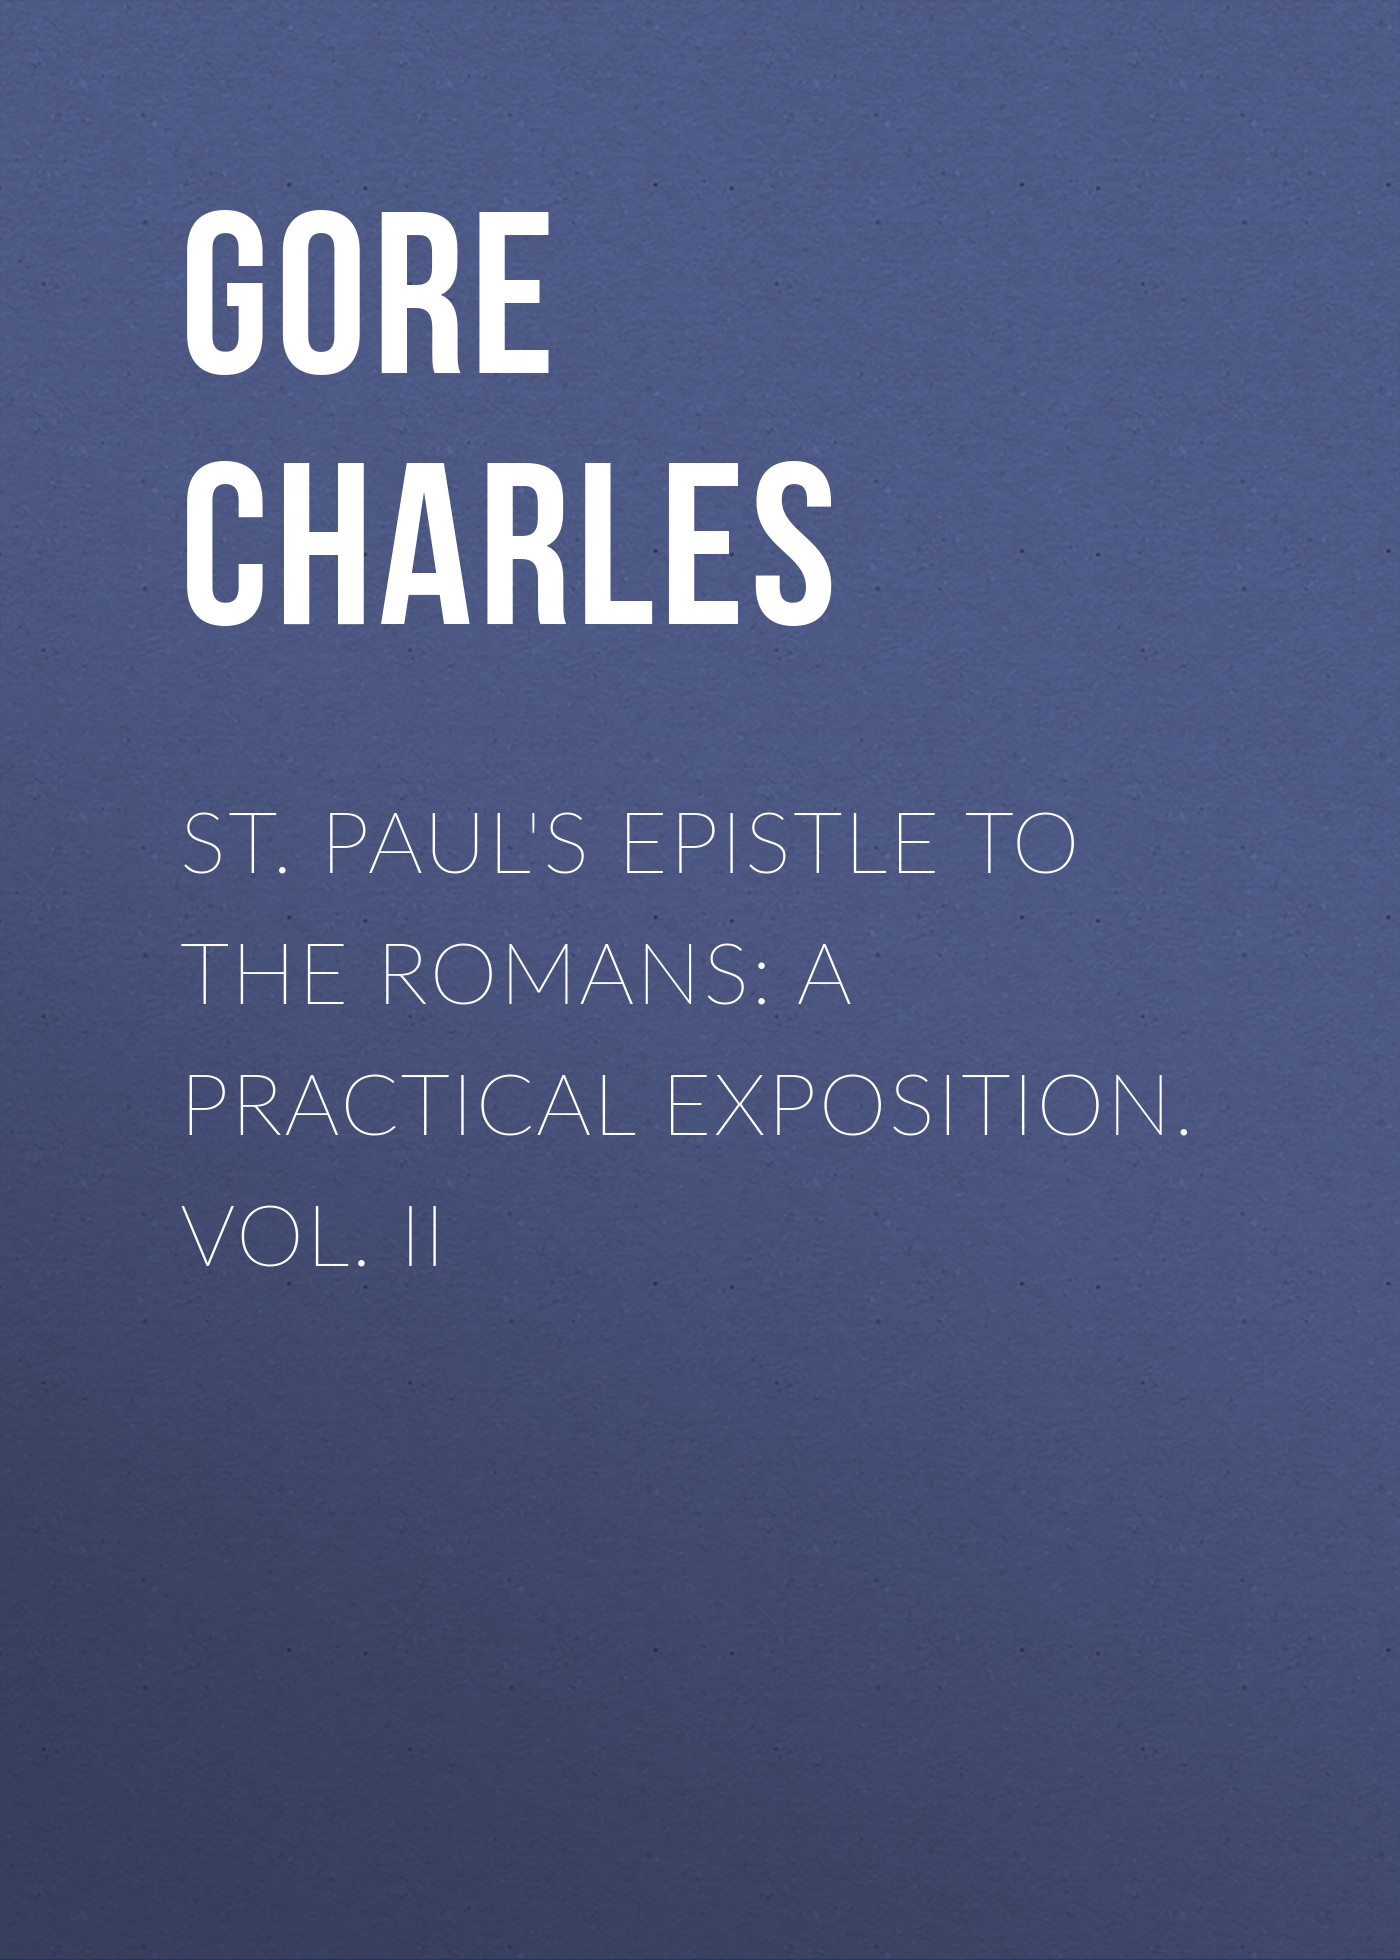 St. Paul's Epistle to the Romans: A Practical Exposition. Vol. II